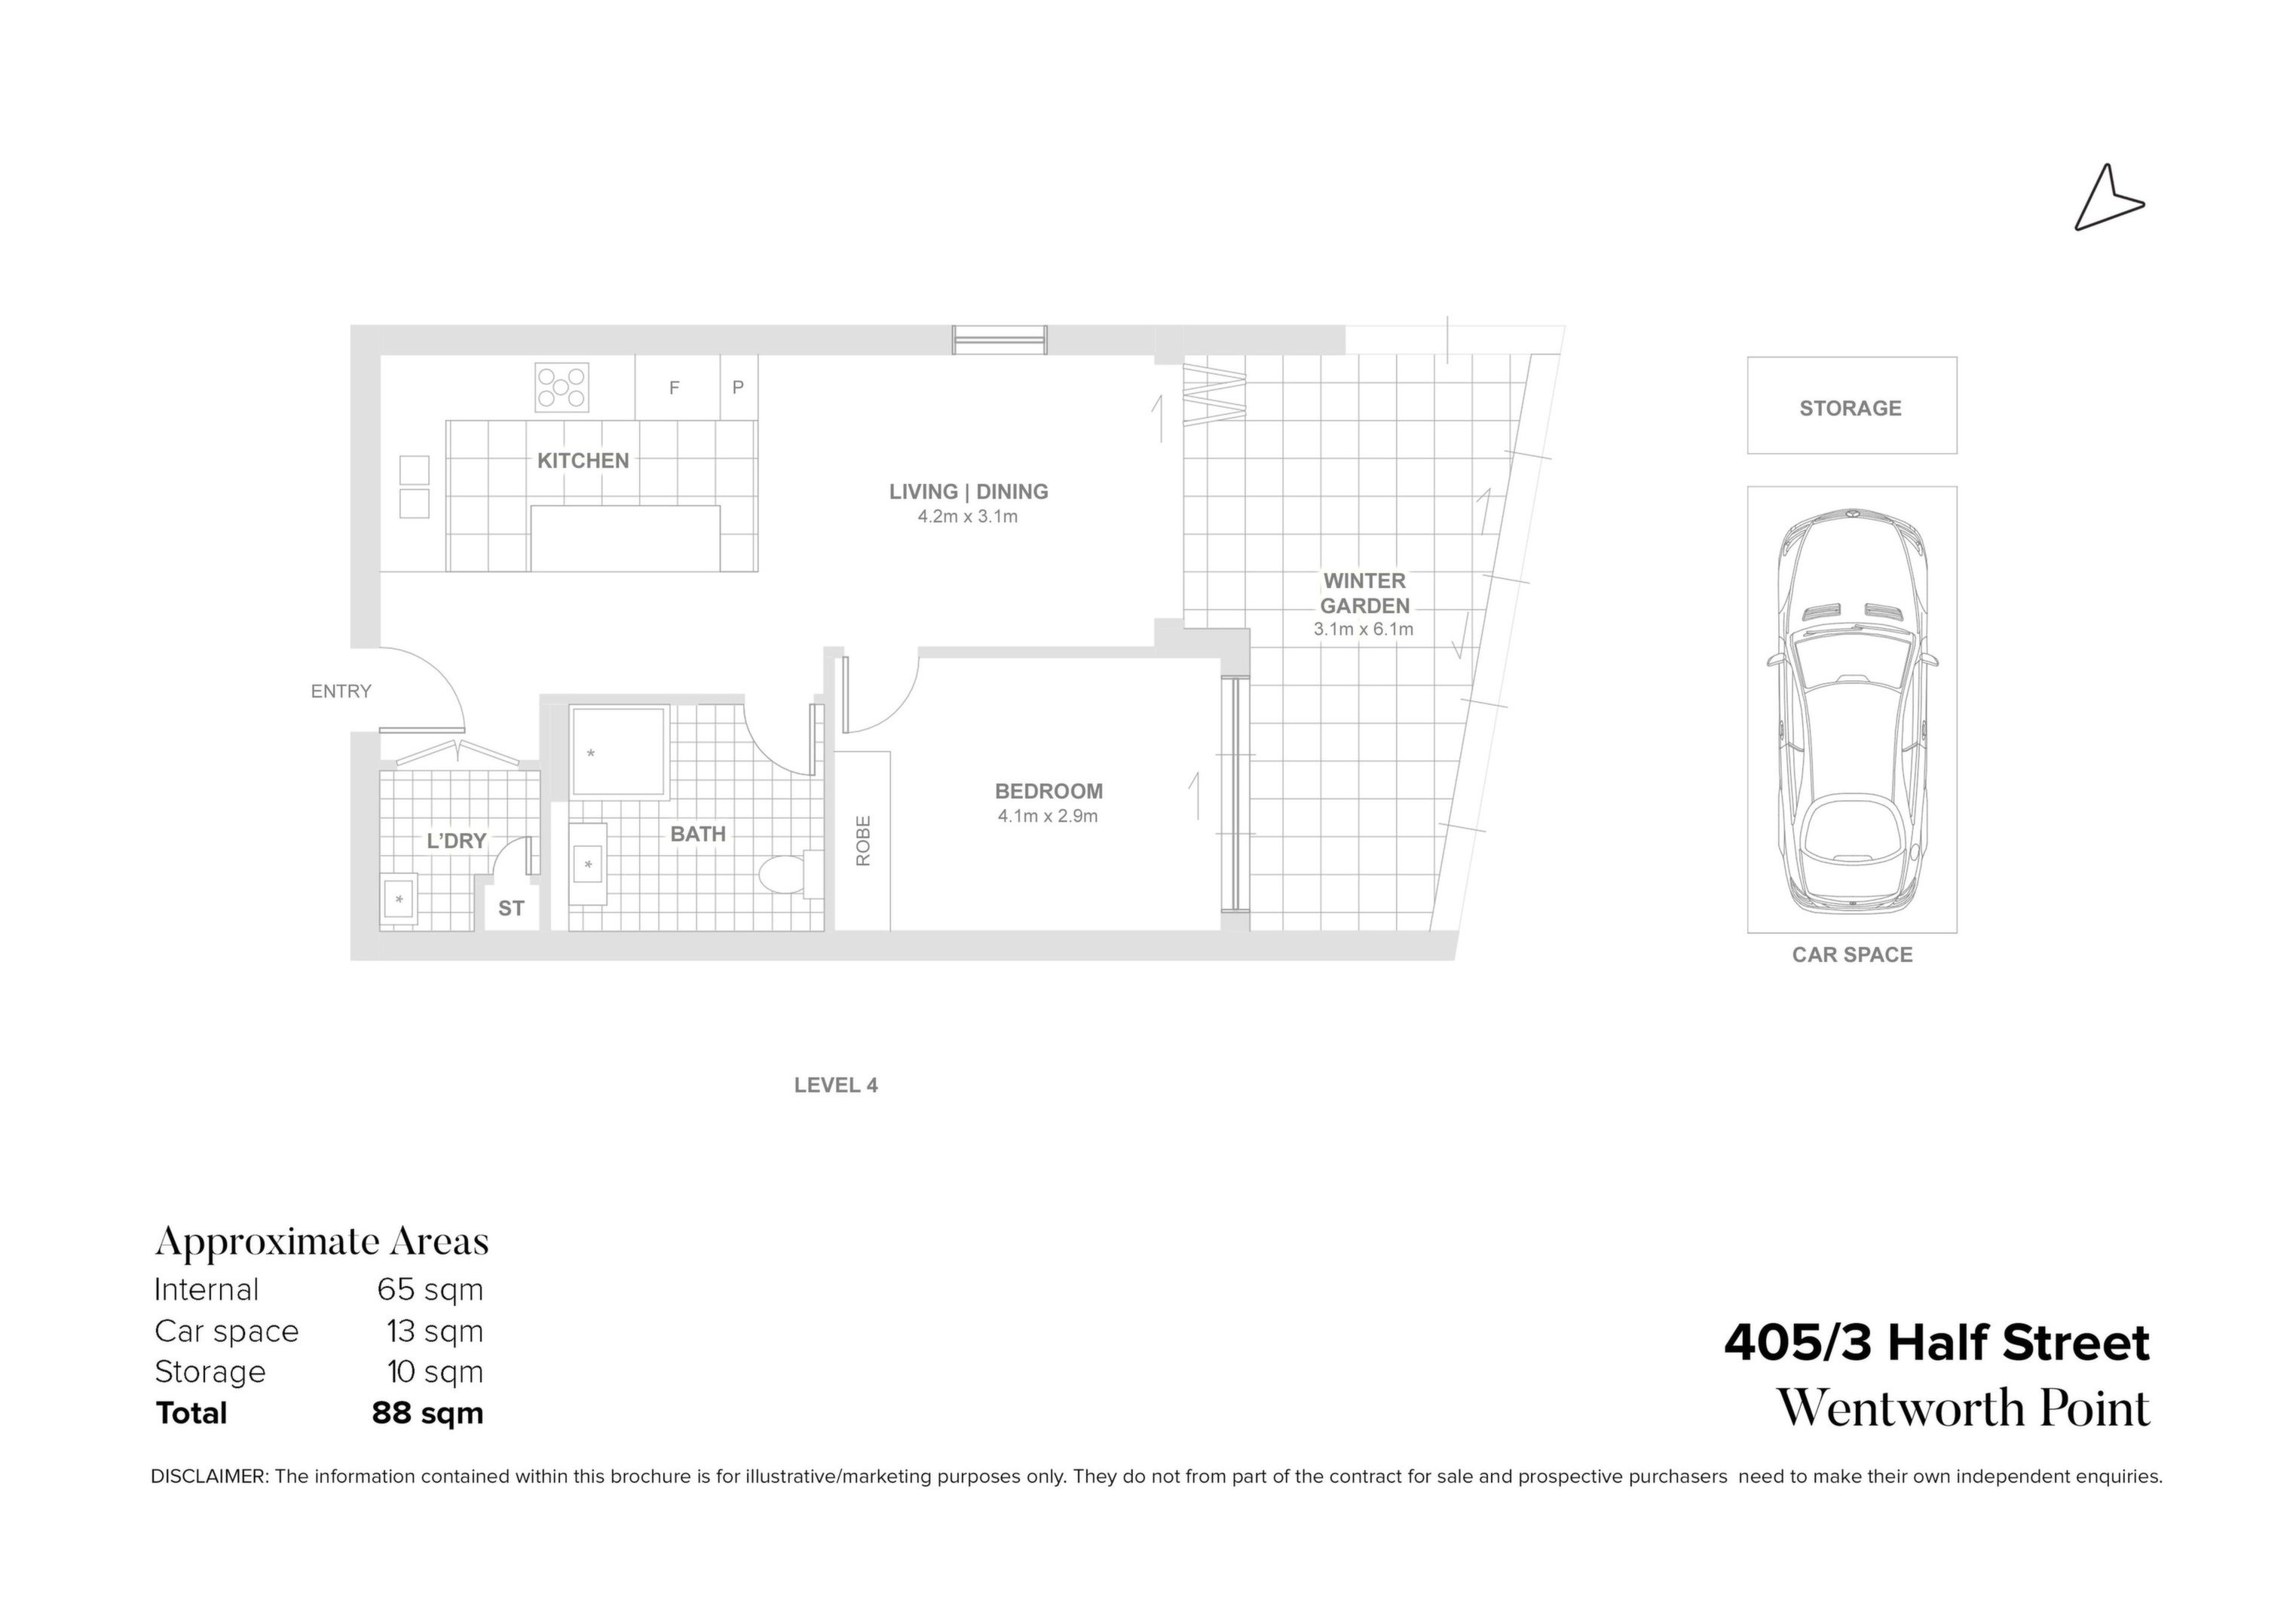 405/3 Half Street, Wentworth Point Sold by Chidiac Realty - floorplan